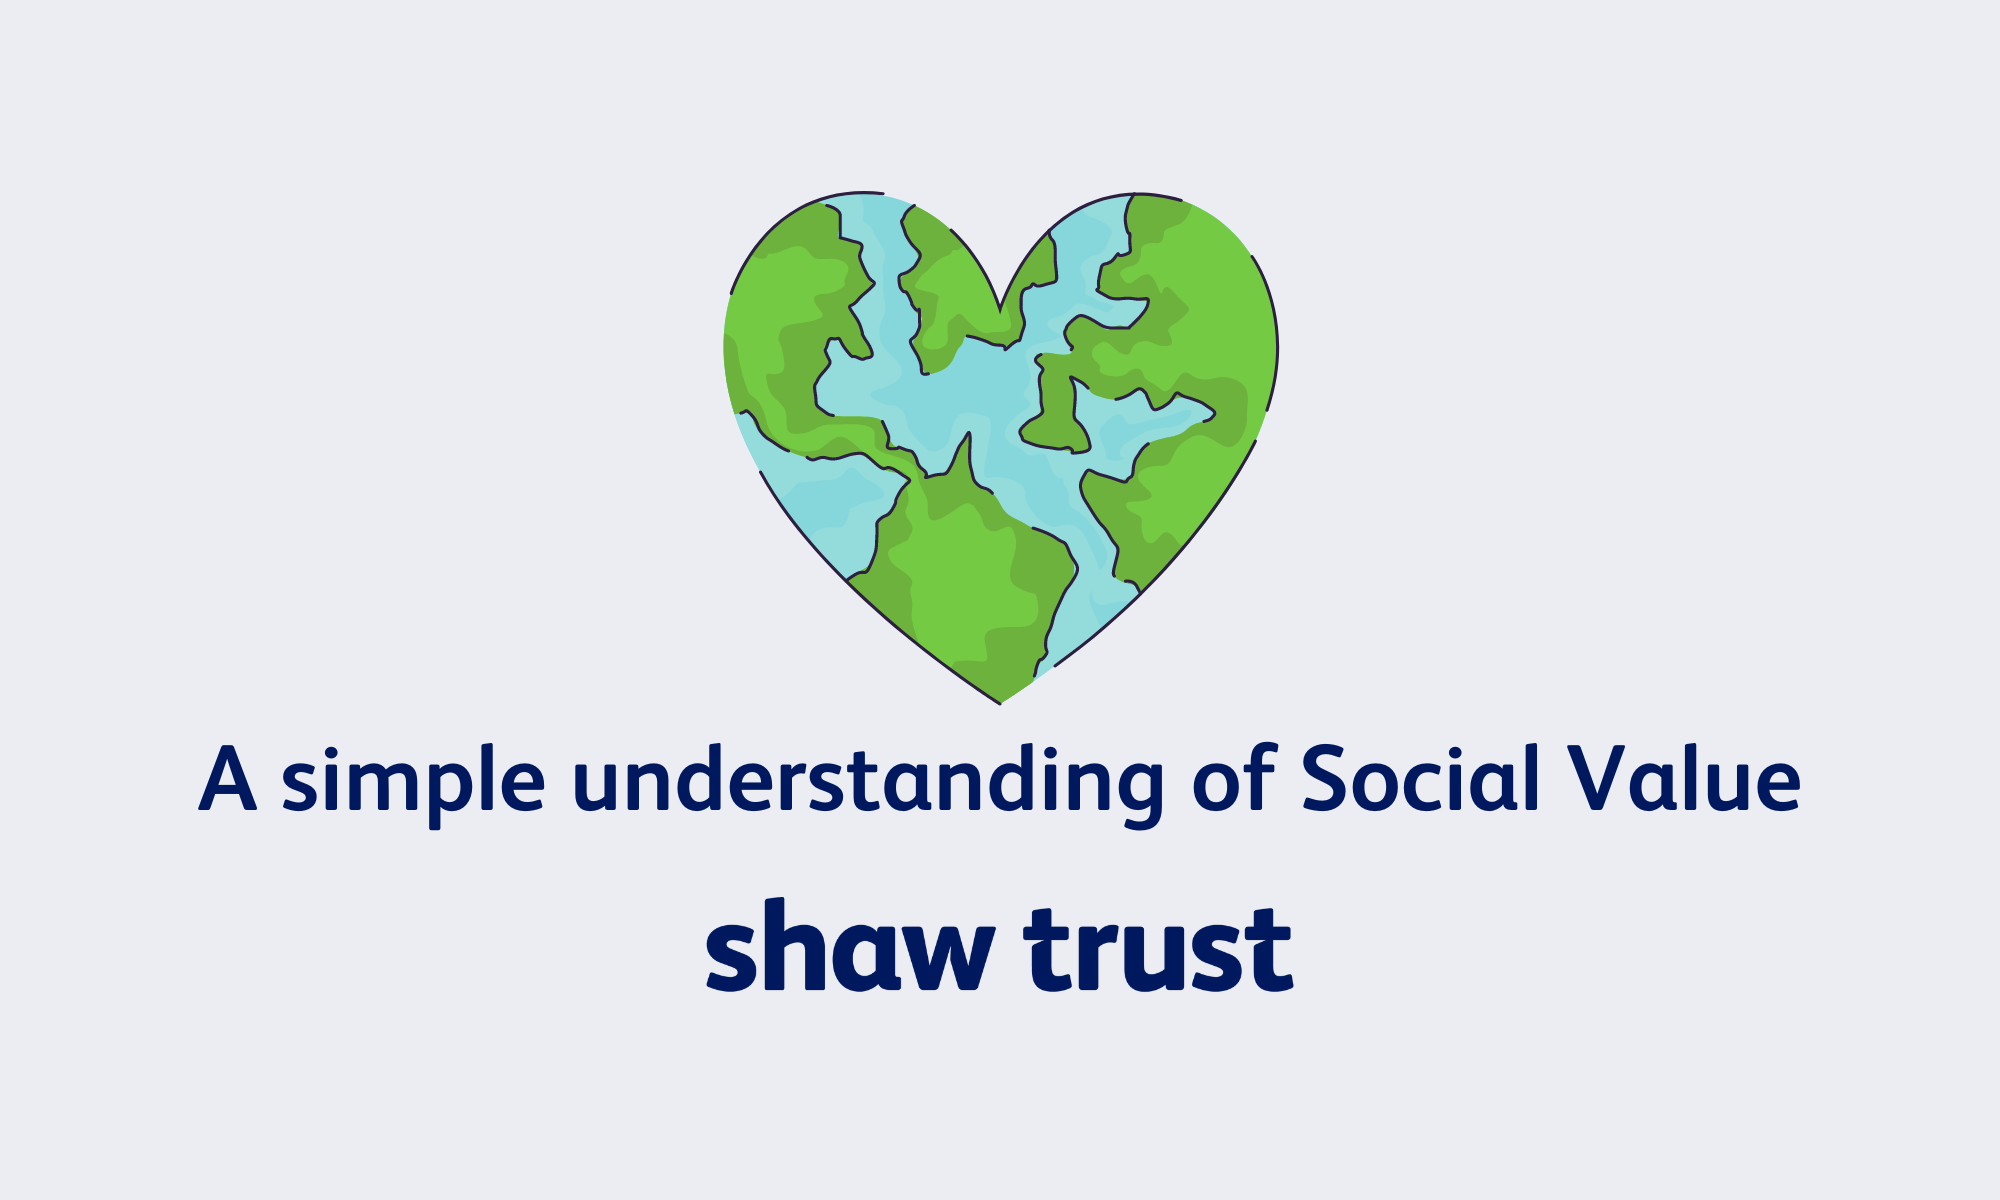 A simple understanding of Social Value